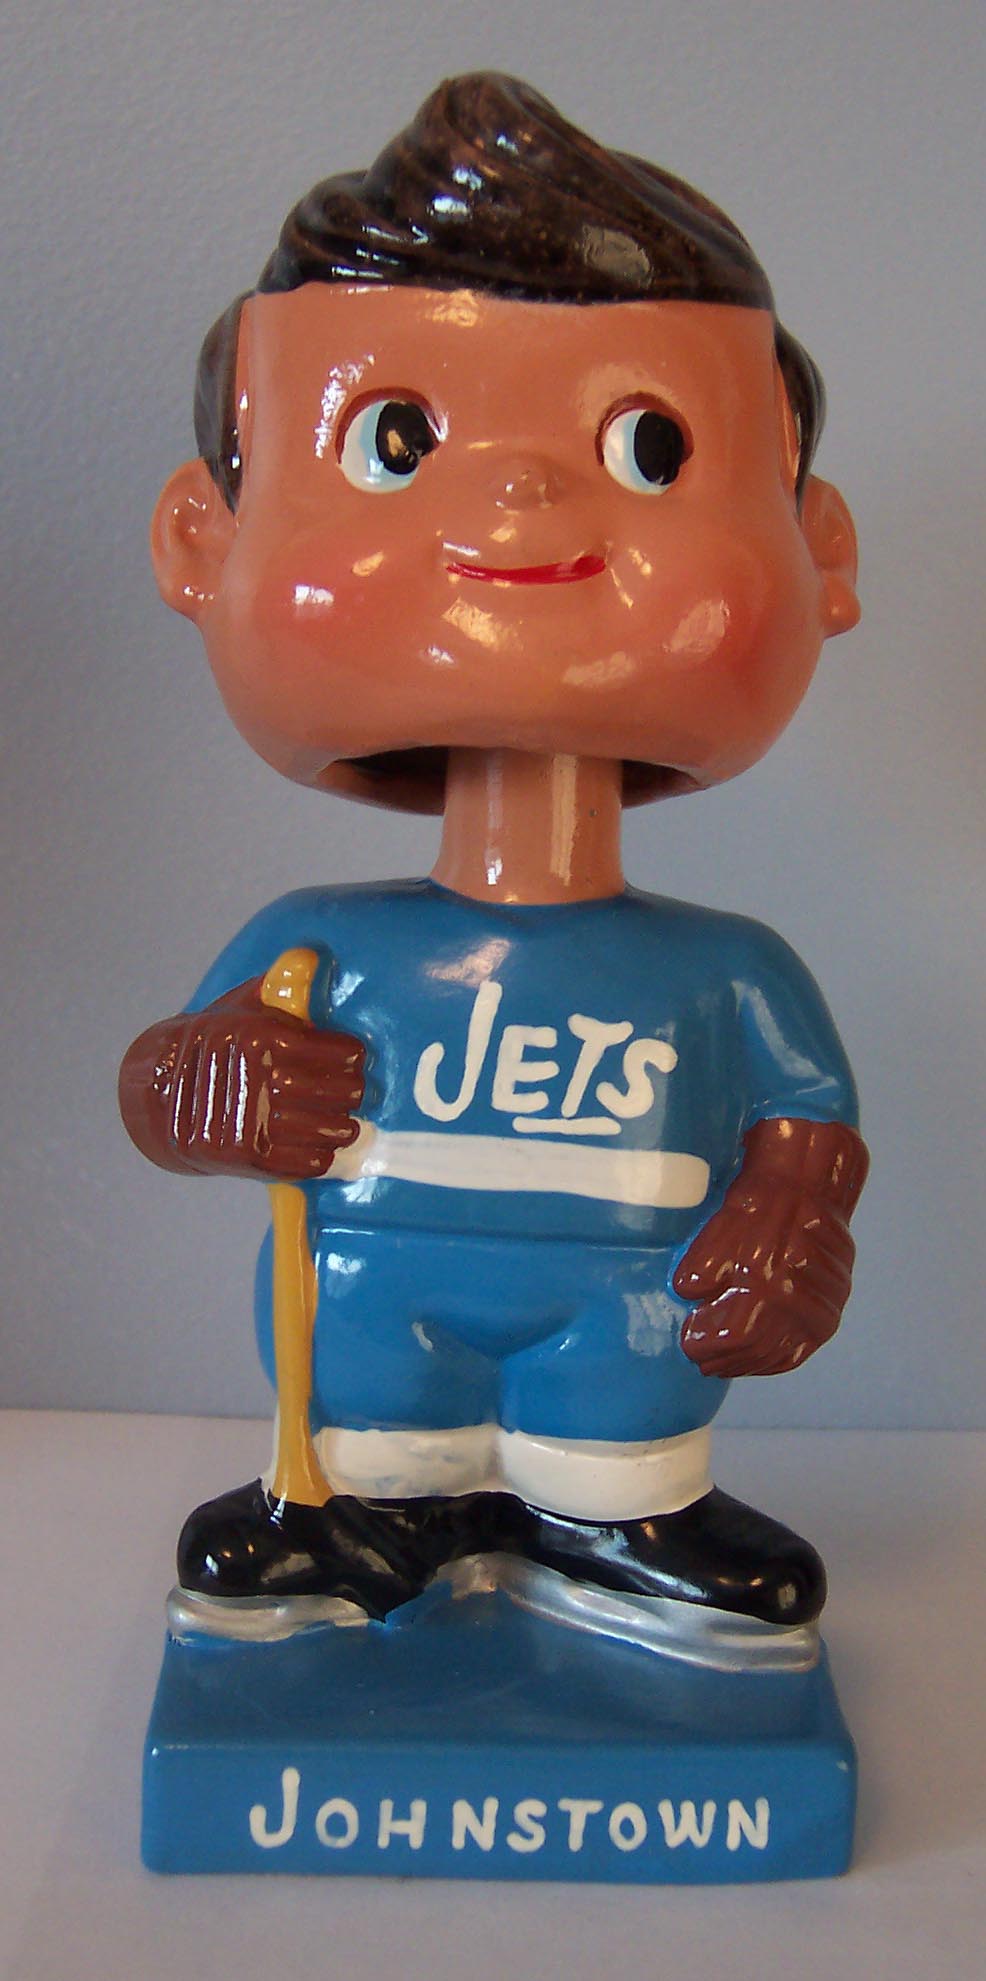 Johnstown Jets doll